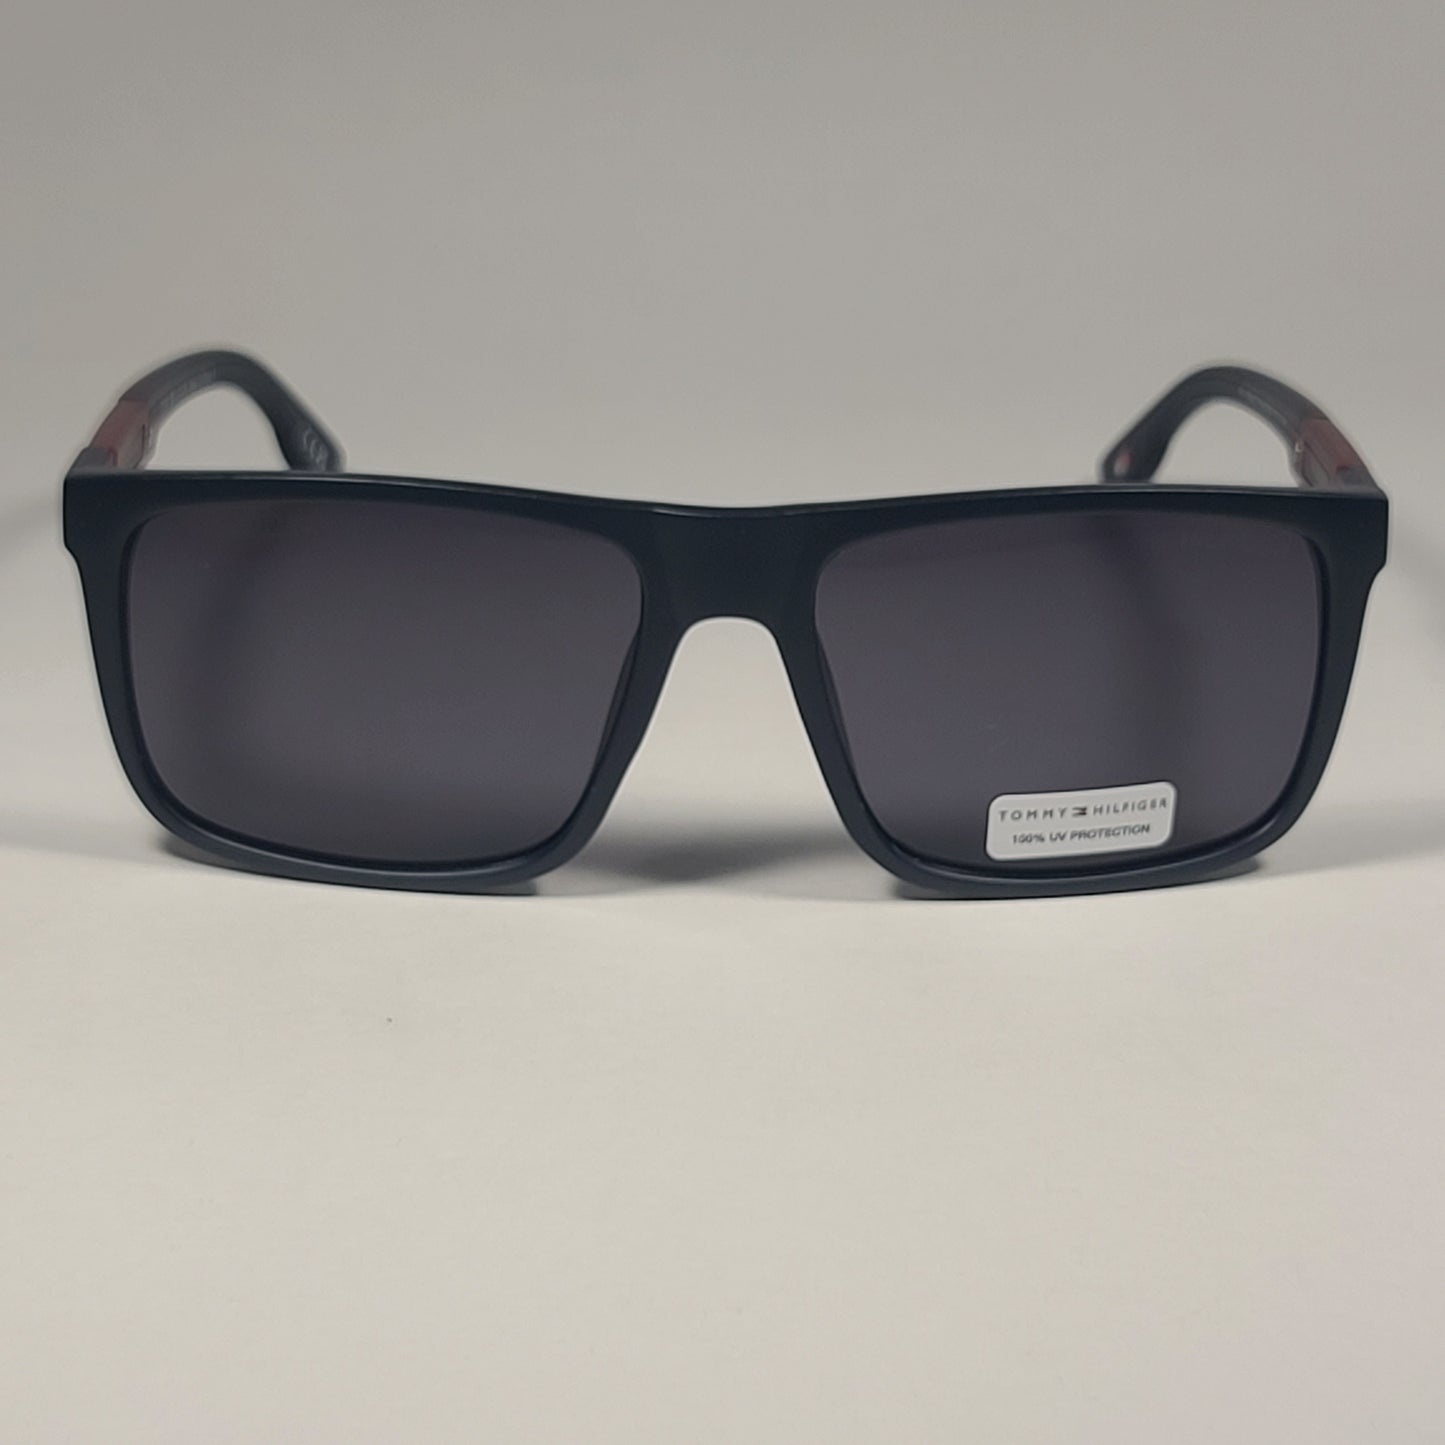 Tommy Hilfiger MP OM620 Rectangular Sunglasses Matte Black Burgundy Frame / Gray Lens - Sunglasses